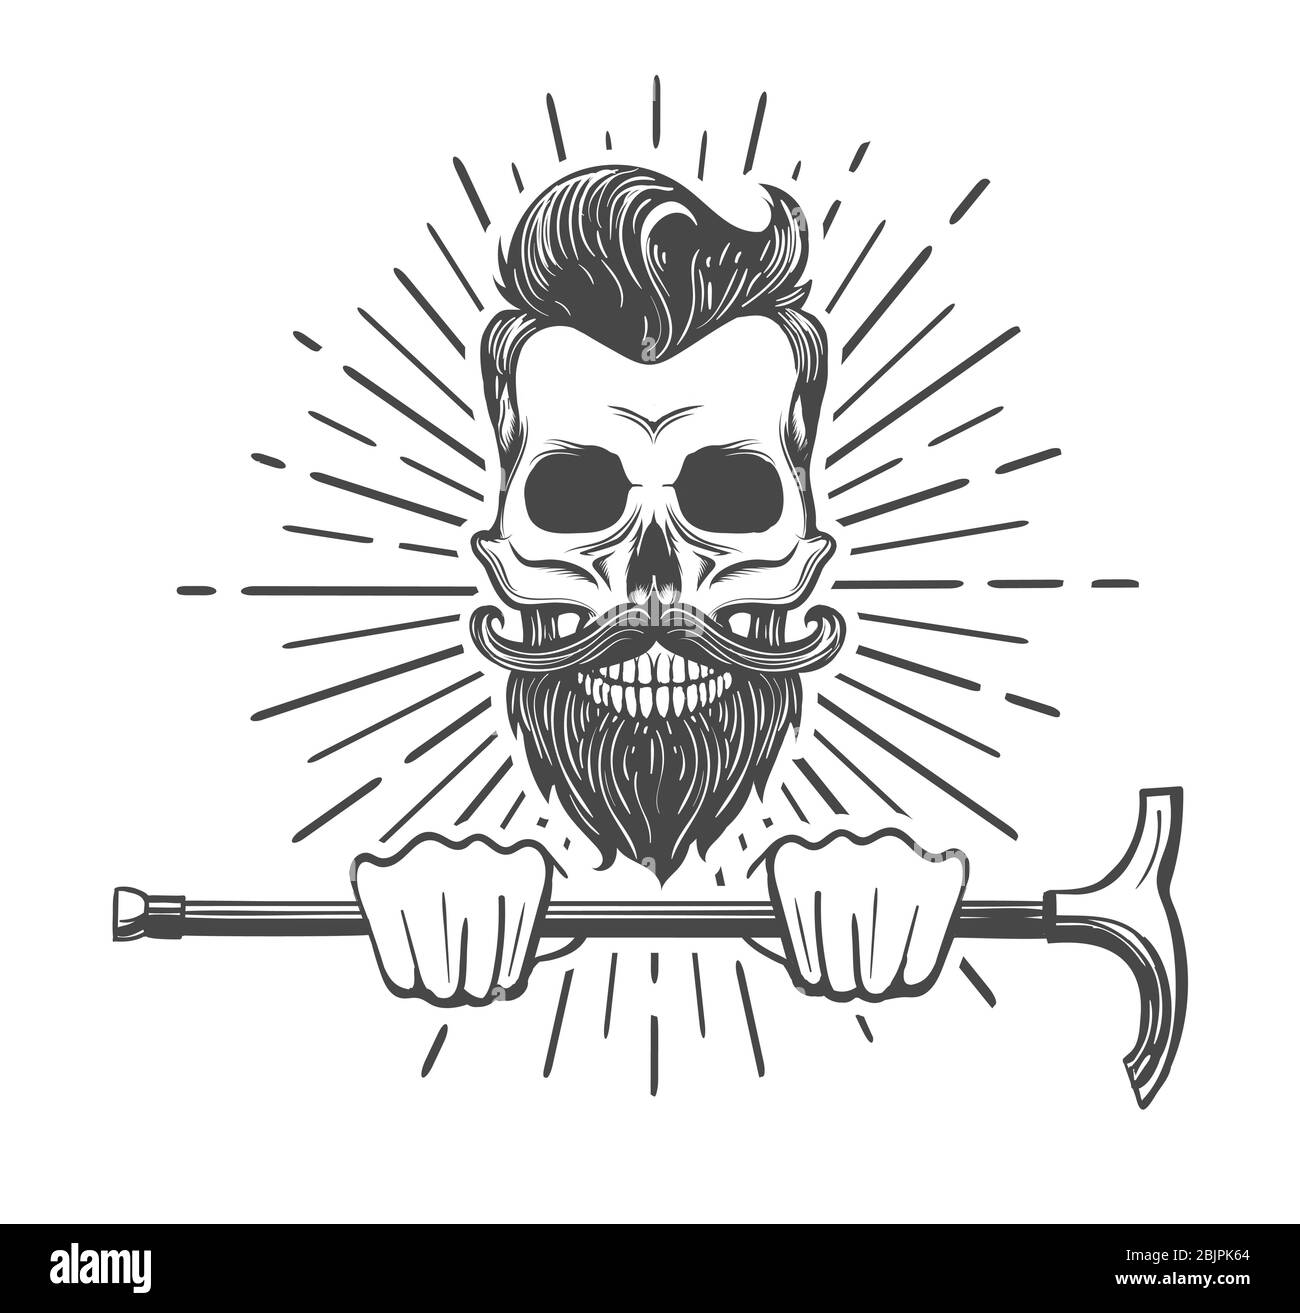 Human Skull mit Schnurrbart und Bart hält Gehstock. Vektorgrafik. Stock Vektor